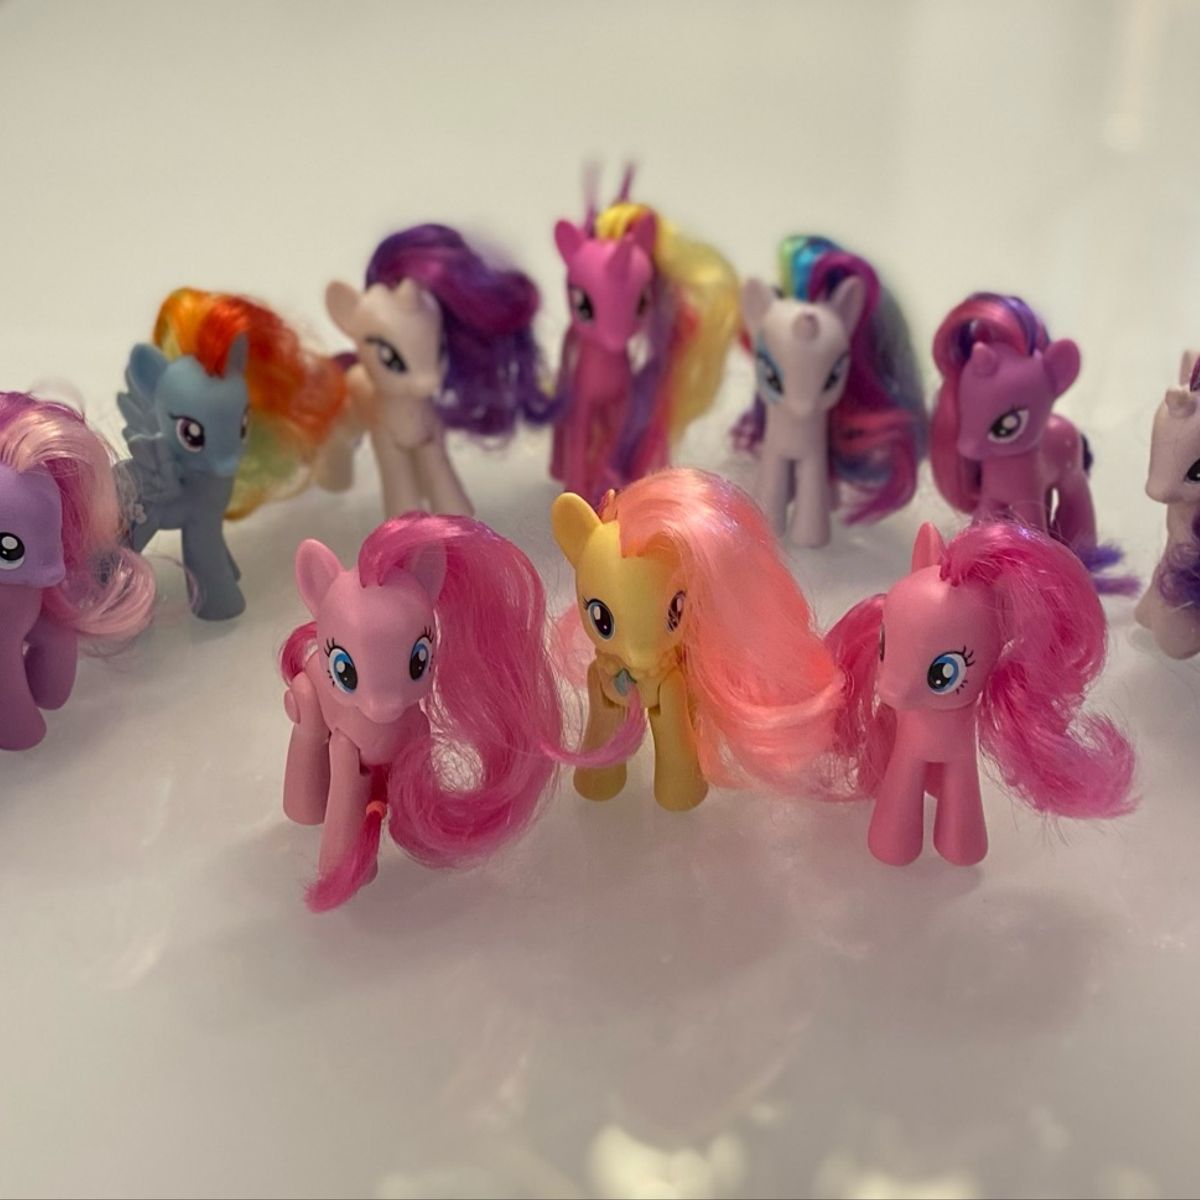 Kit C/12 Personagens My Little Pony Miniaturas Colecionáveis.